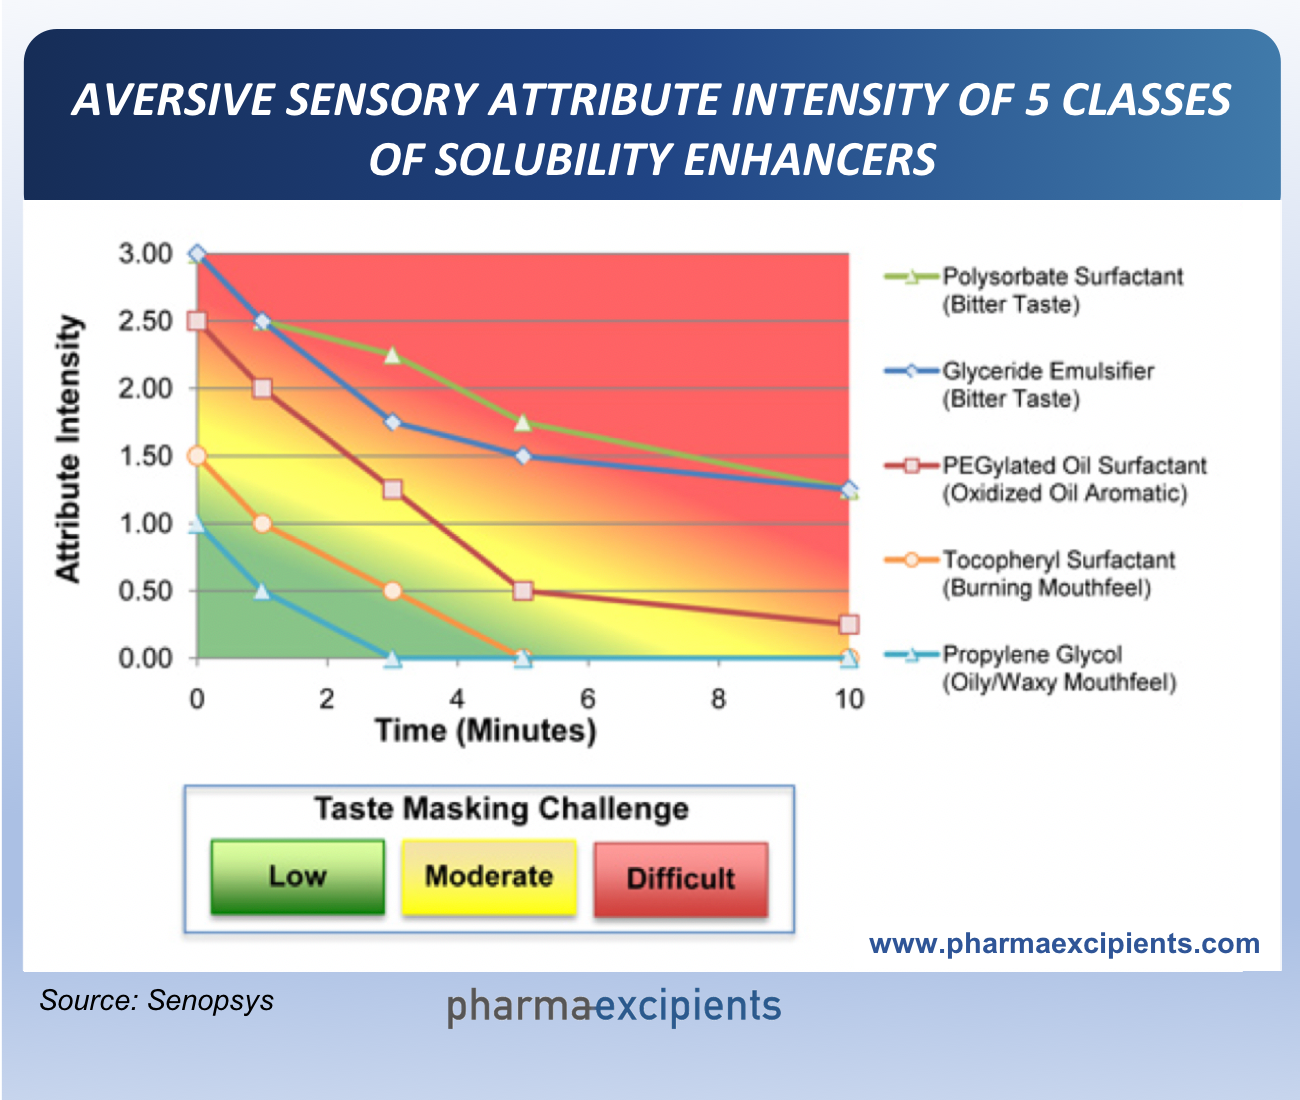 AVERSIVE SENSORY ATTRIBUTE INTENSITY OF 5 CLASSES OF SOLUBILITY ENHANCERS